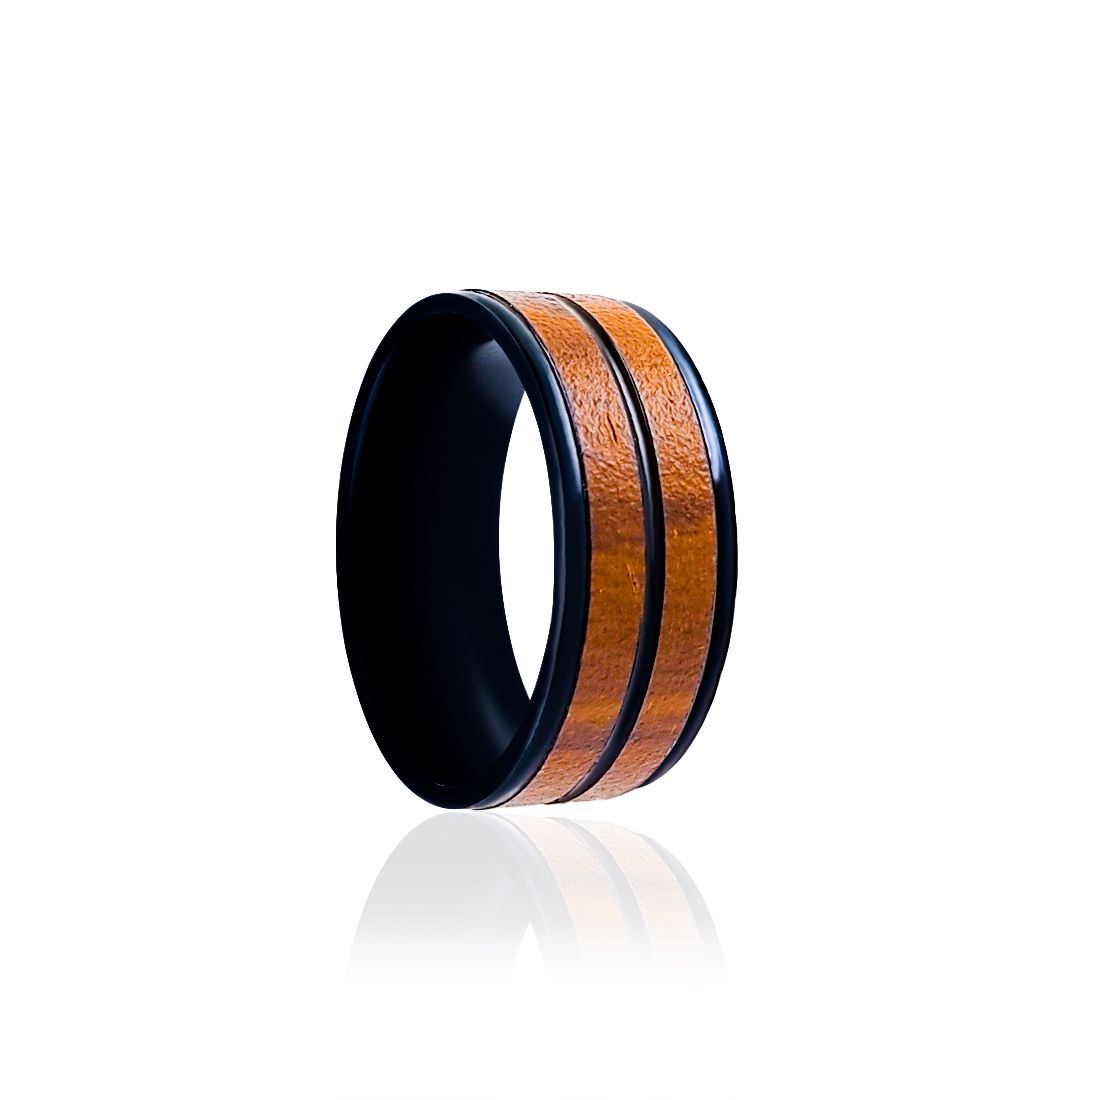 Saizen Stylish Brown Black Band Finger Ring for Men